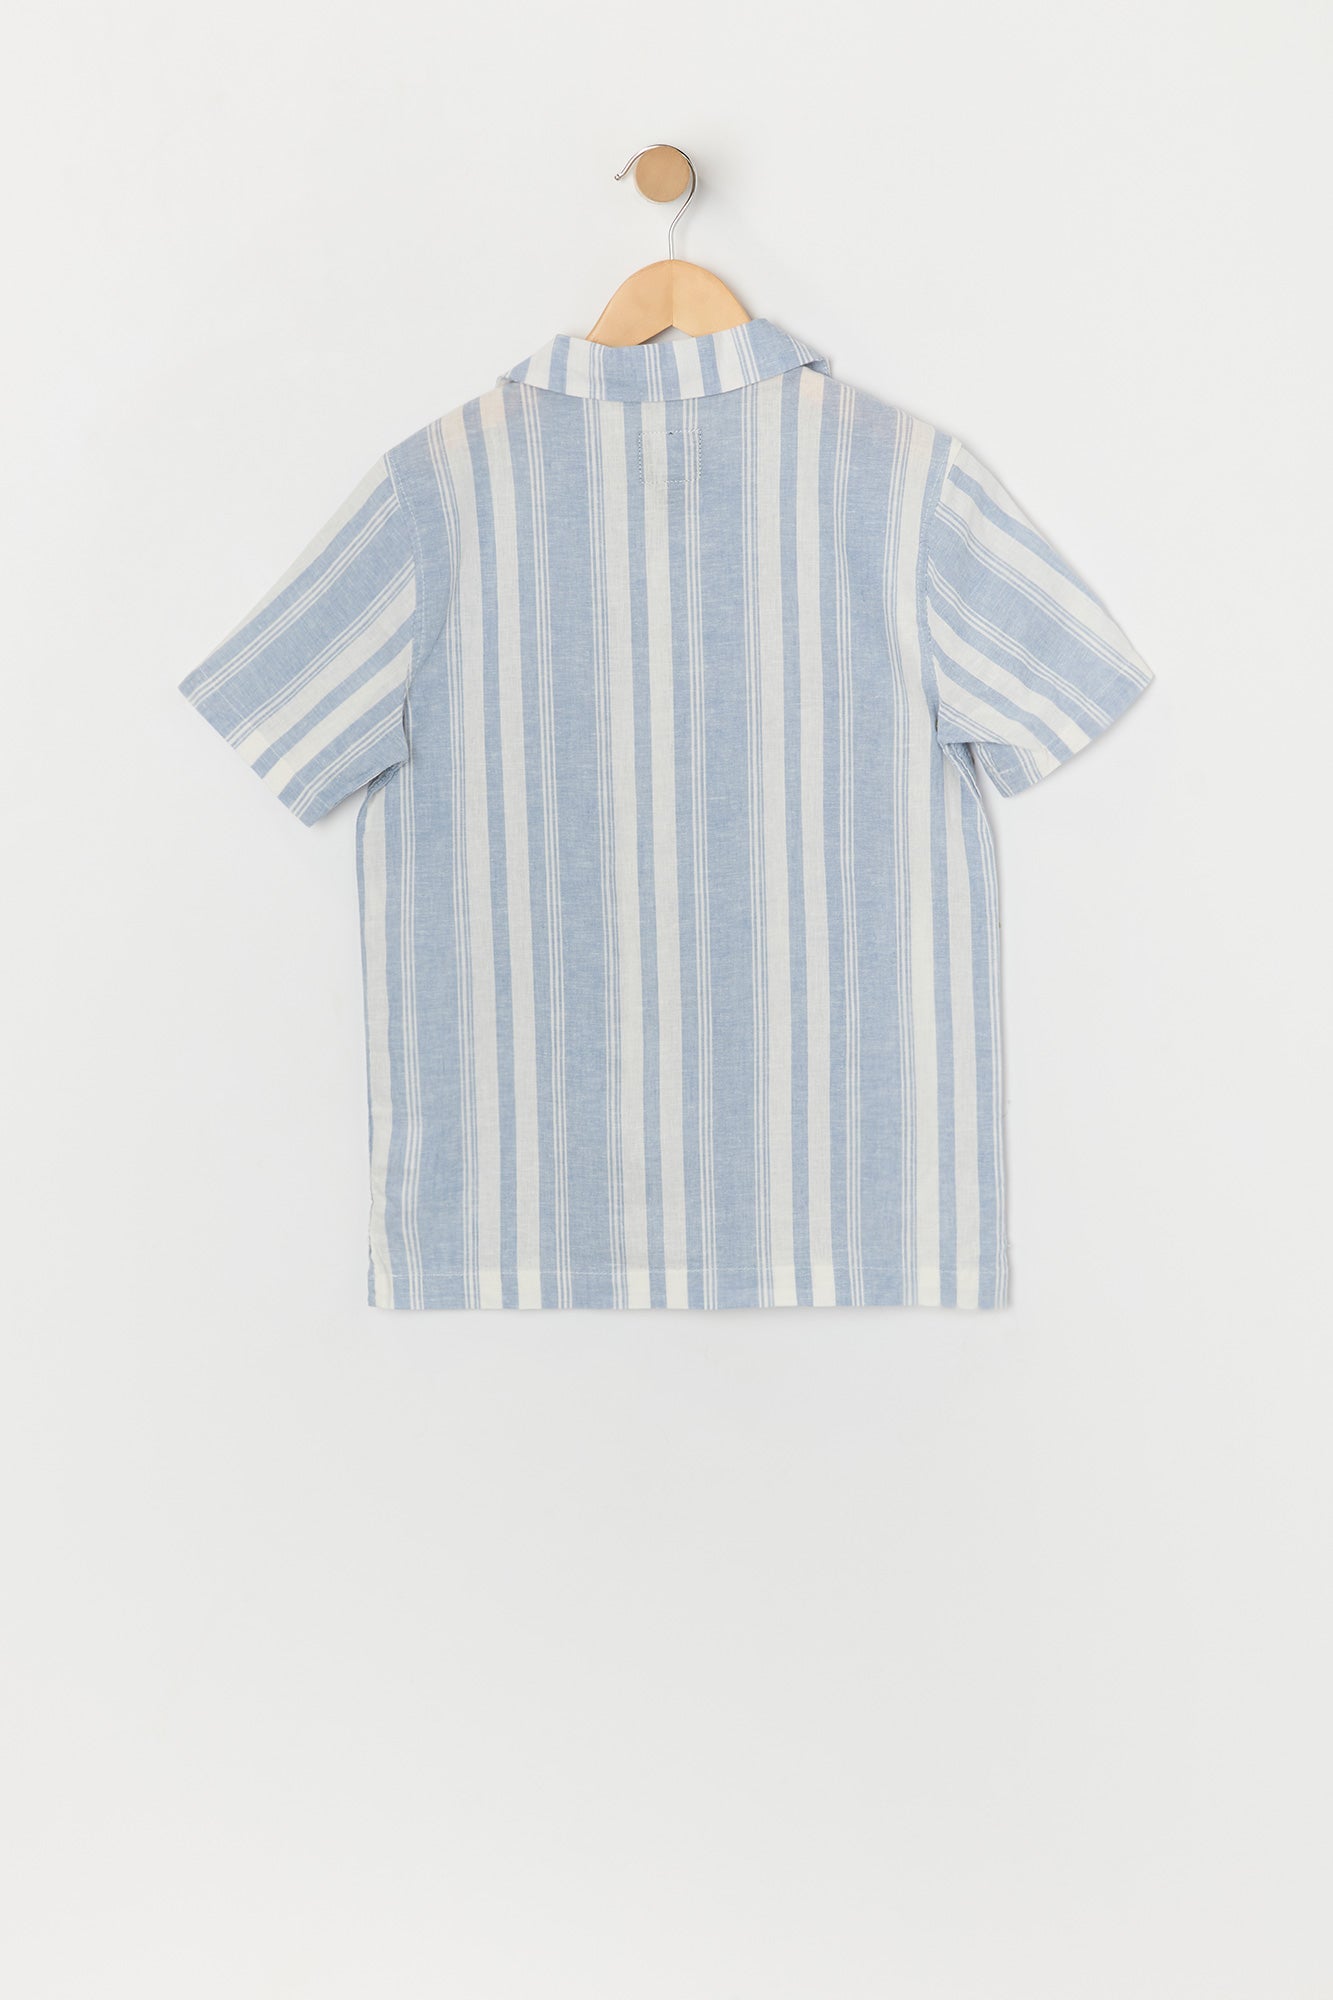 Boys Linen Striped Short Sleeve Button-Up Top